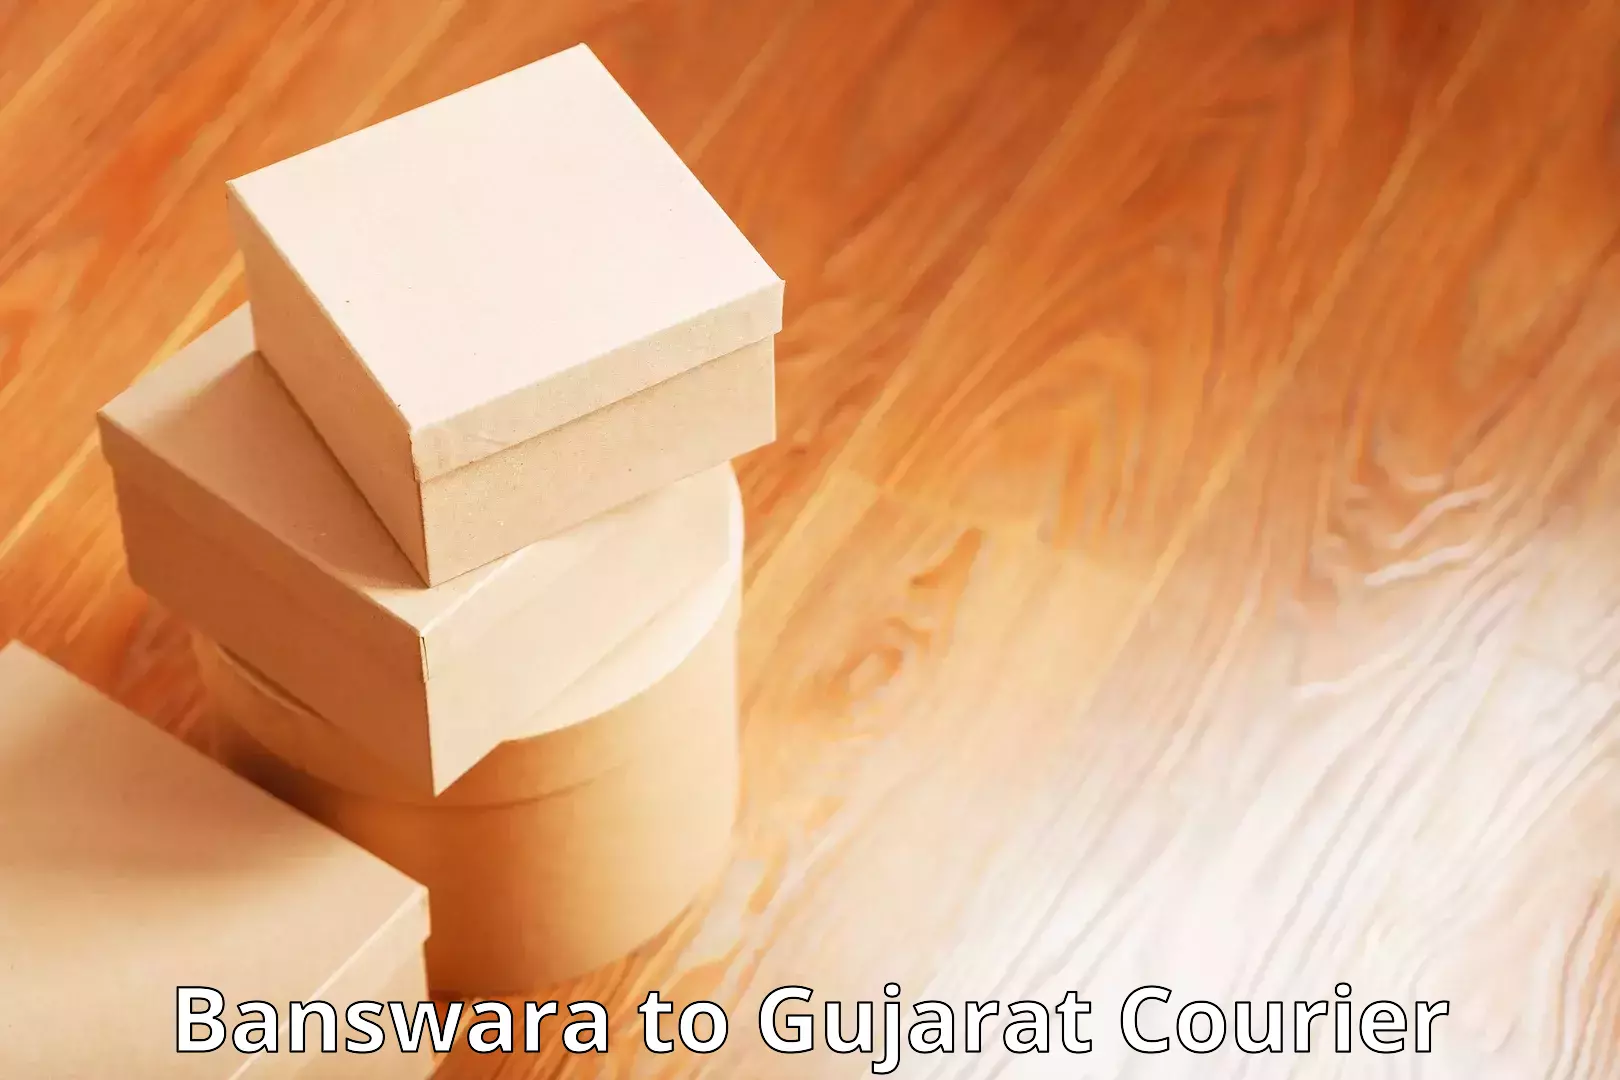 Dynamic courier operations Banswara to GIDC